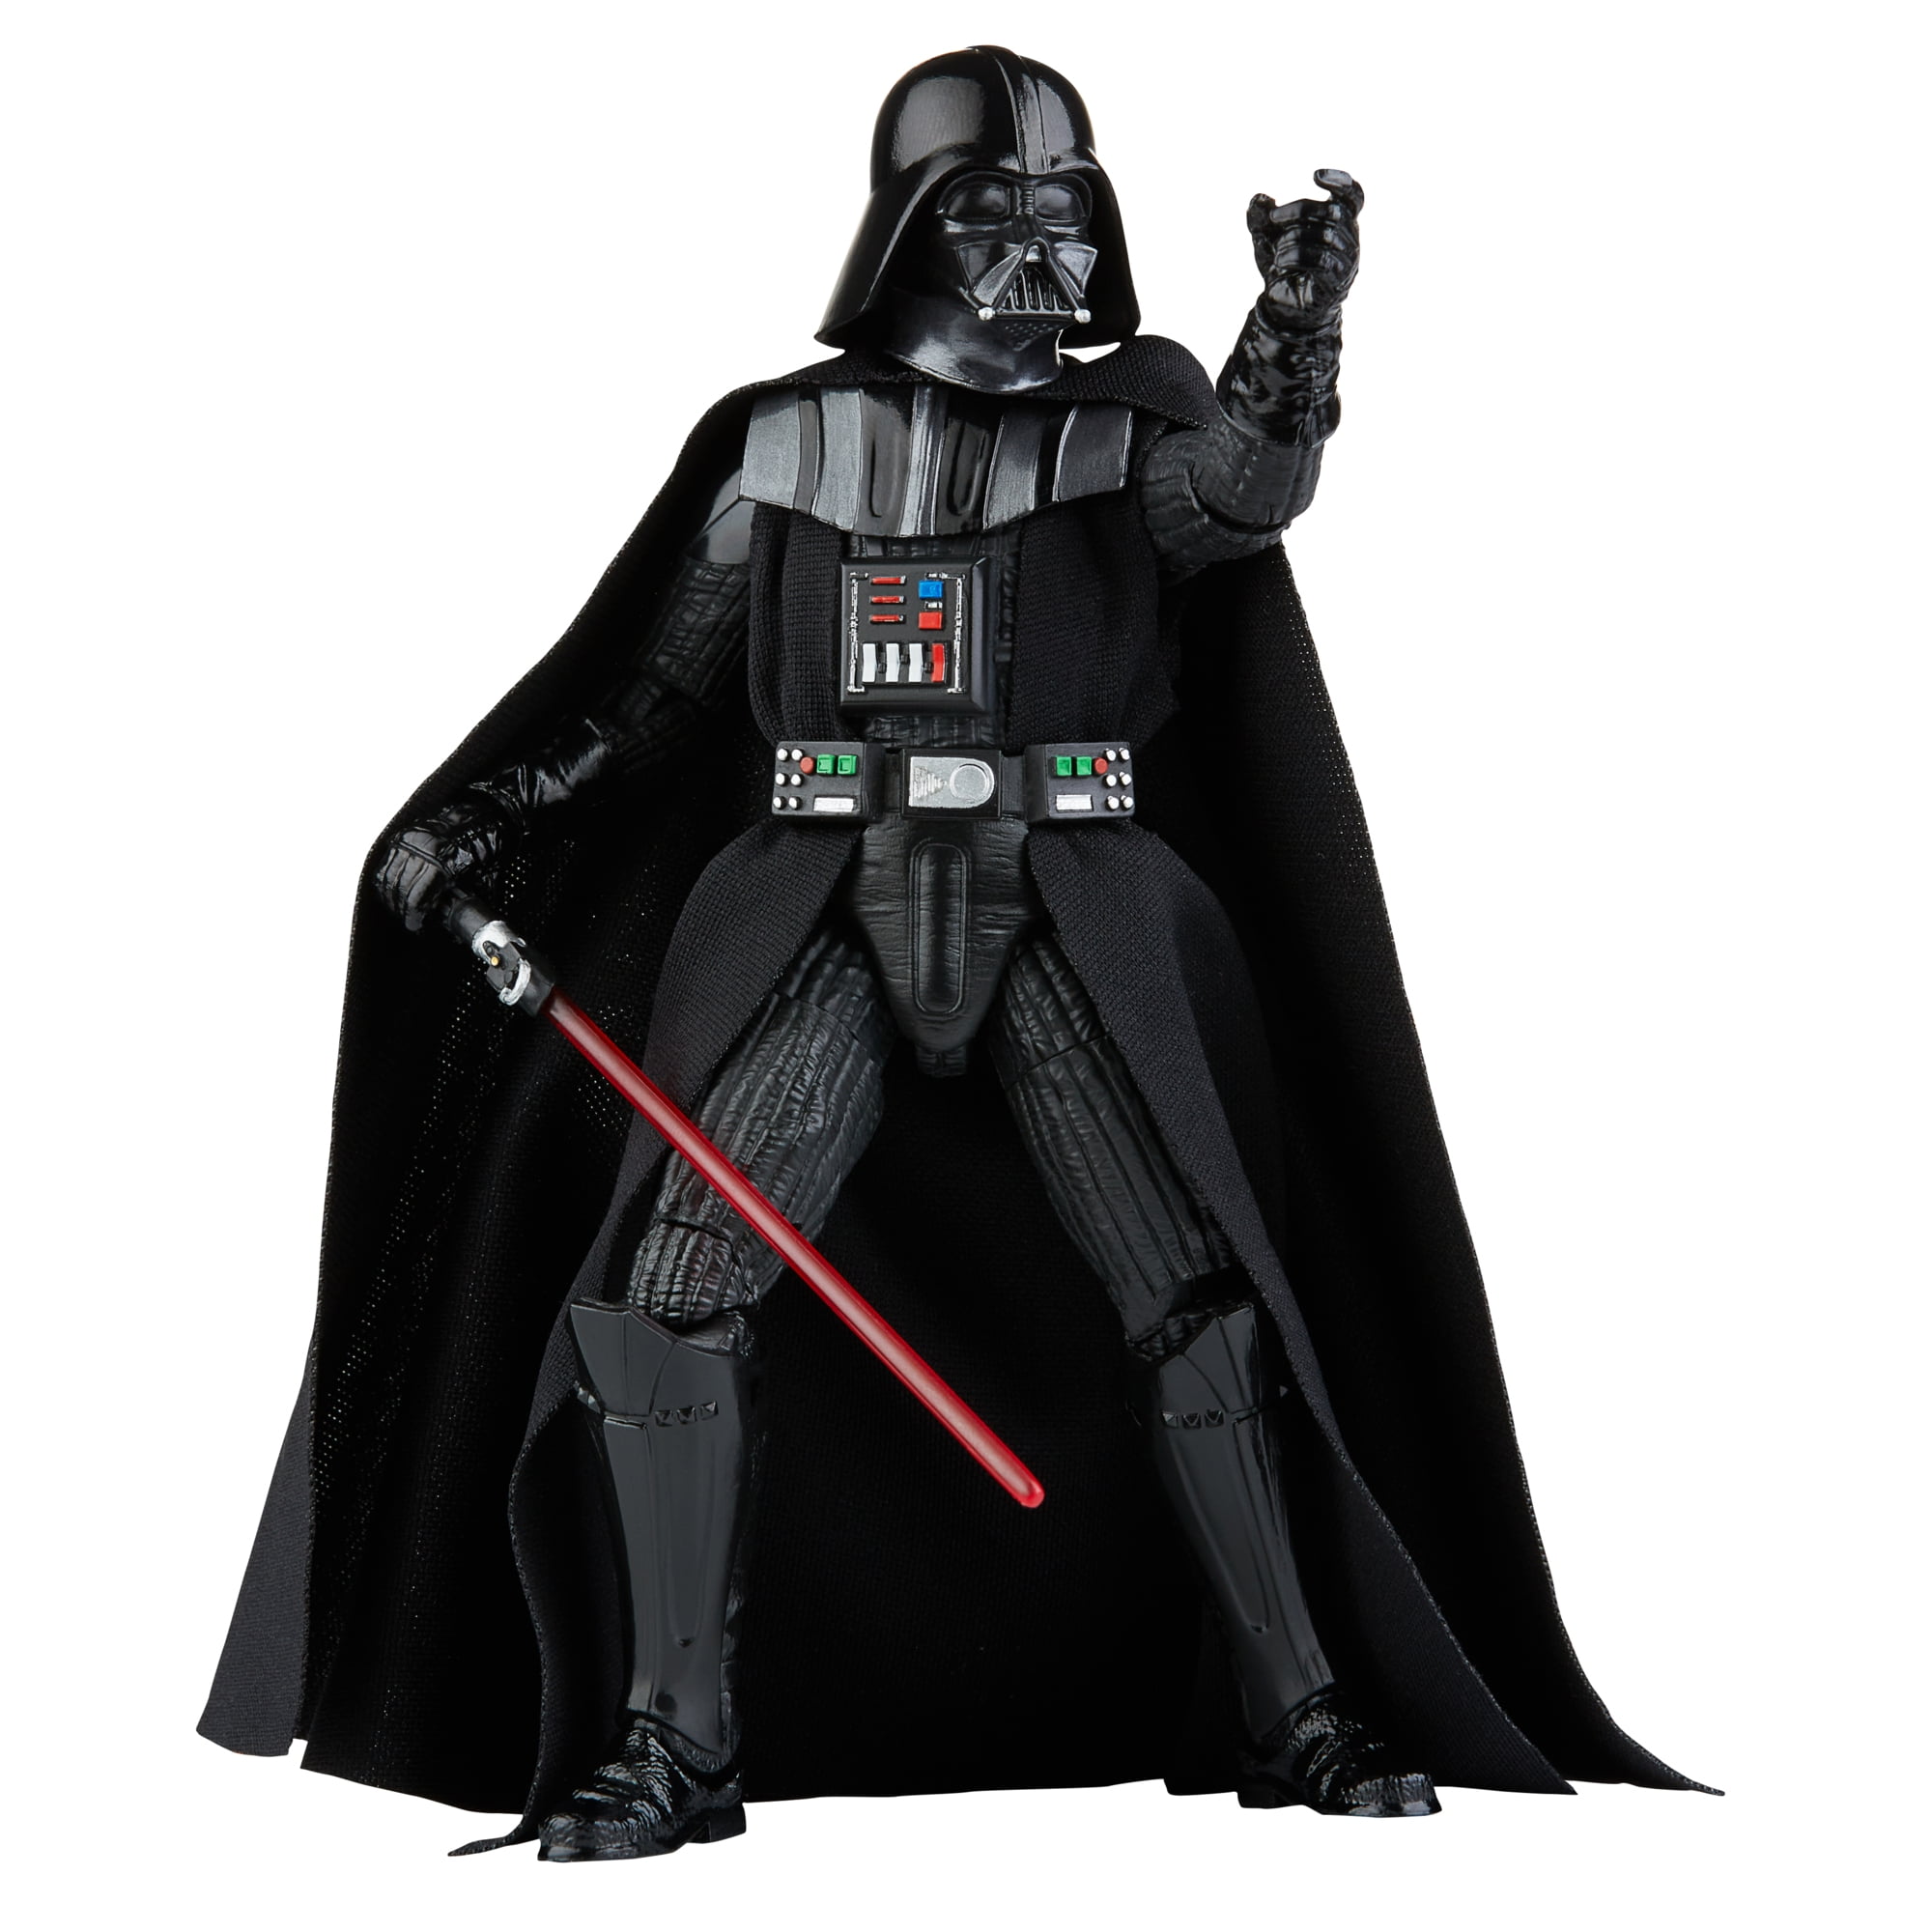 Star Wars The Black Series Carbonized Darth Vader 6" Action Figure for sale online